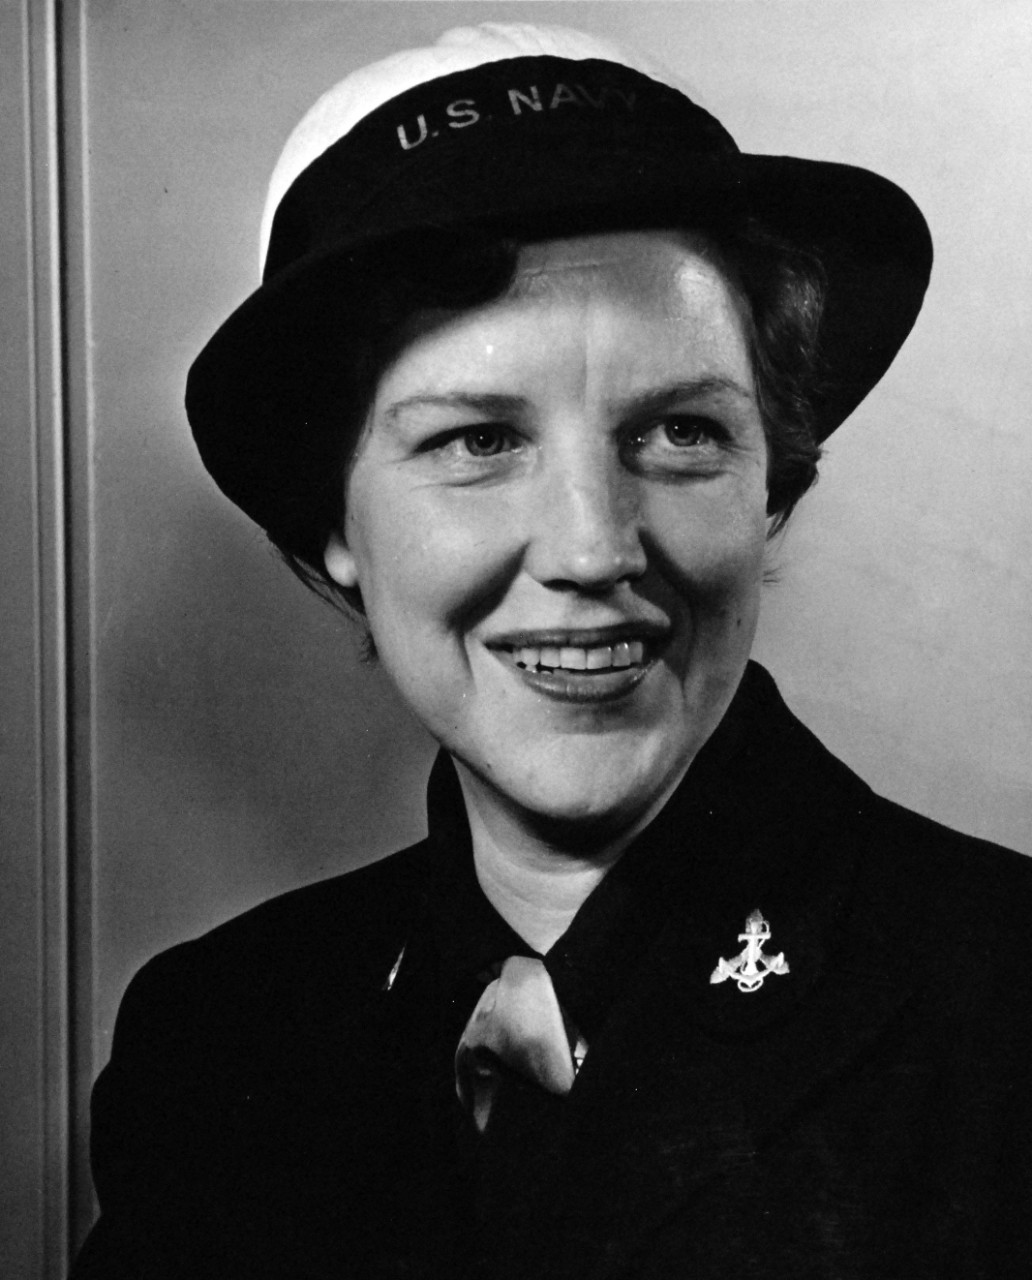 80-G-43791:  U.S. Navy WAVE, S(P)2/c Jane Orbison, USNR, November 1943.    Service Dress Blue.  Portrait photograph received November 20, 1943.   Official U.S. Navy photograph, now in the collections of the National Archives.  